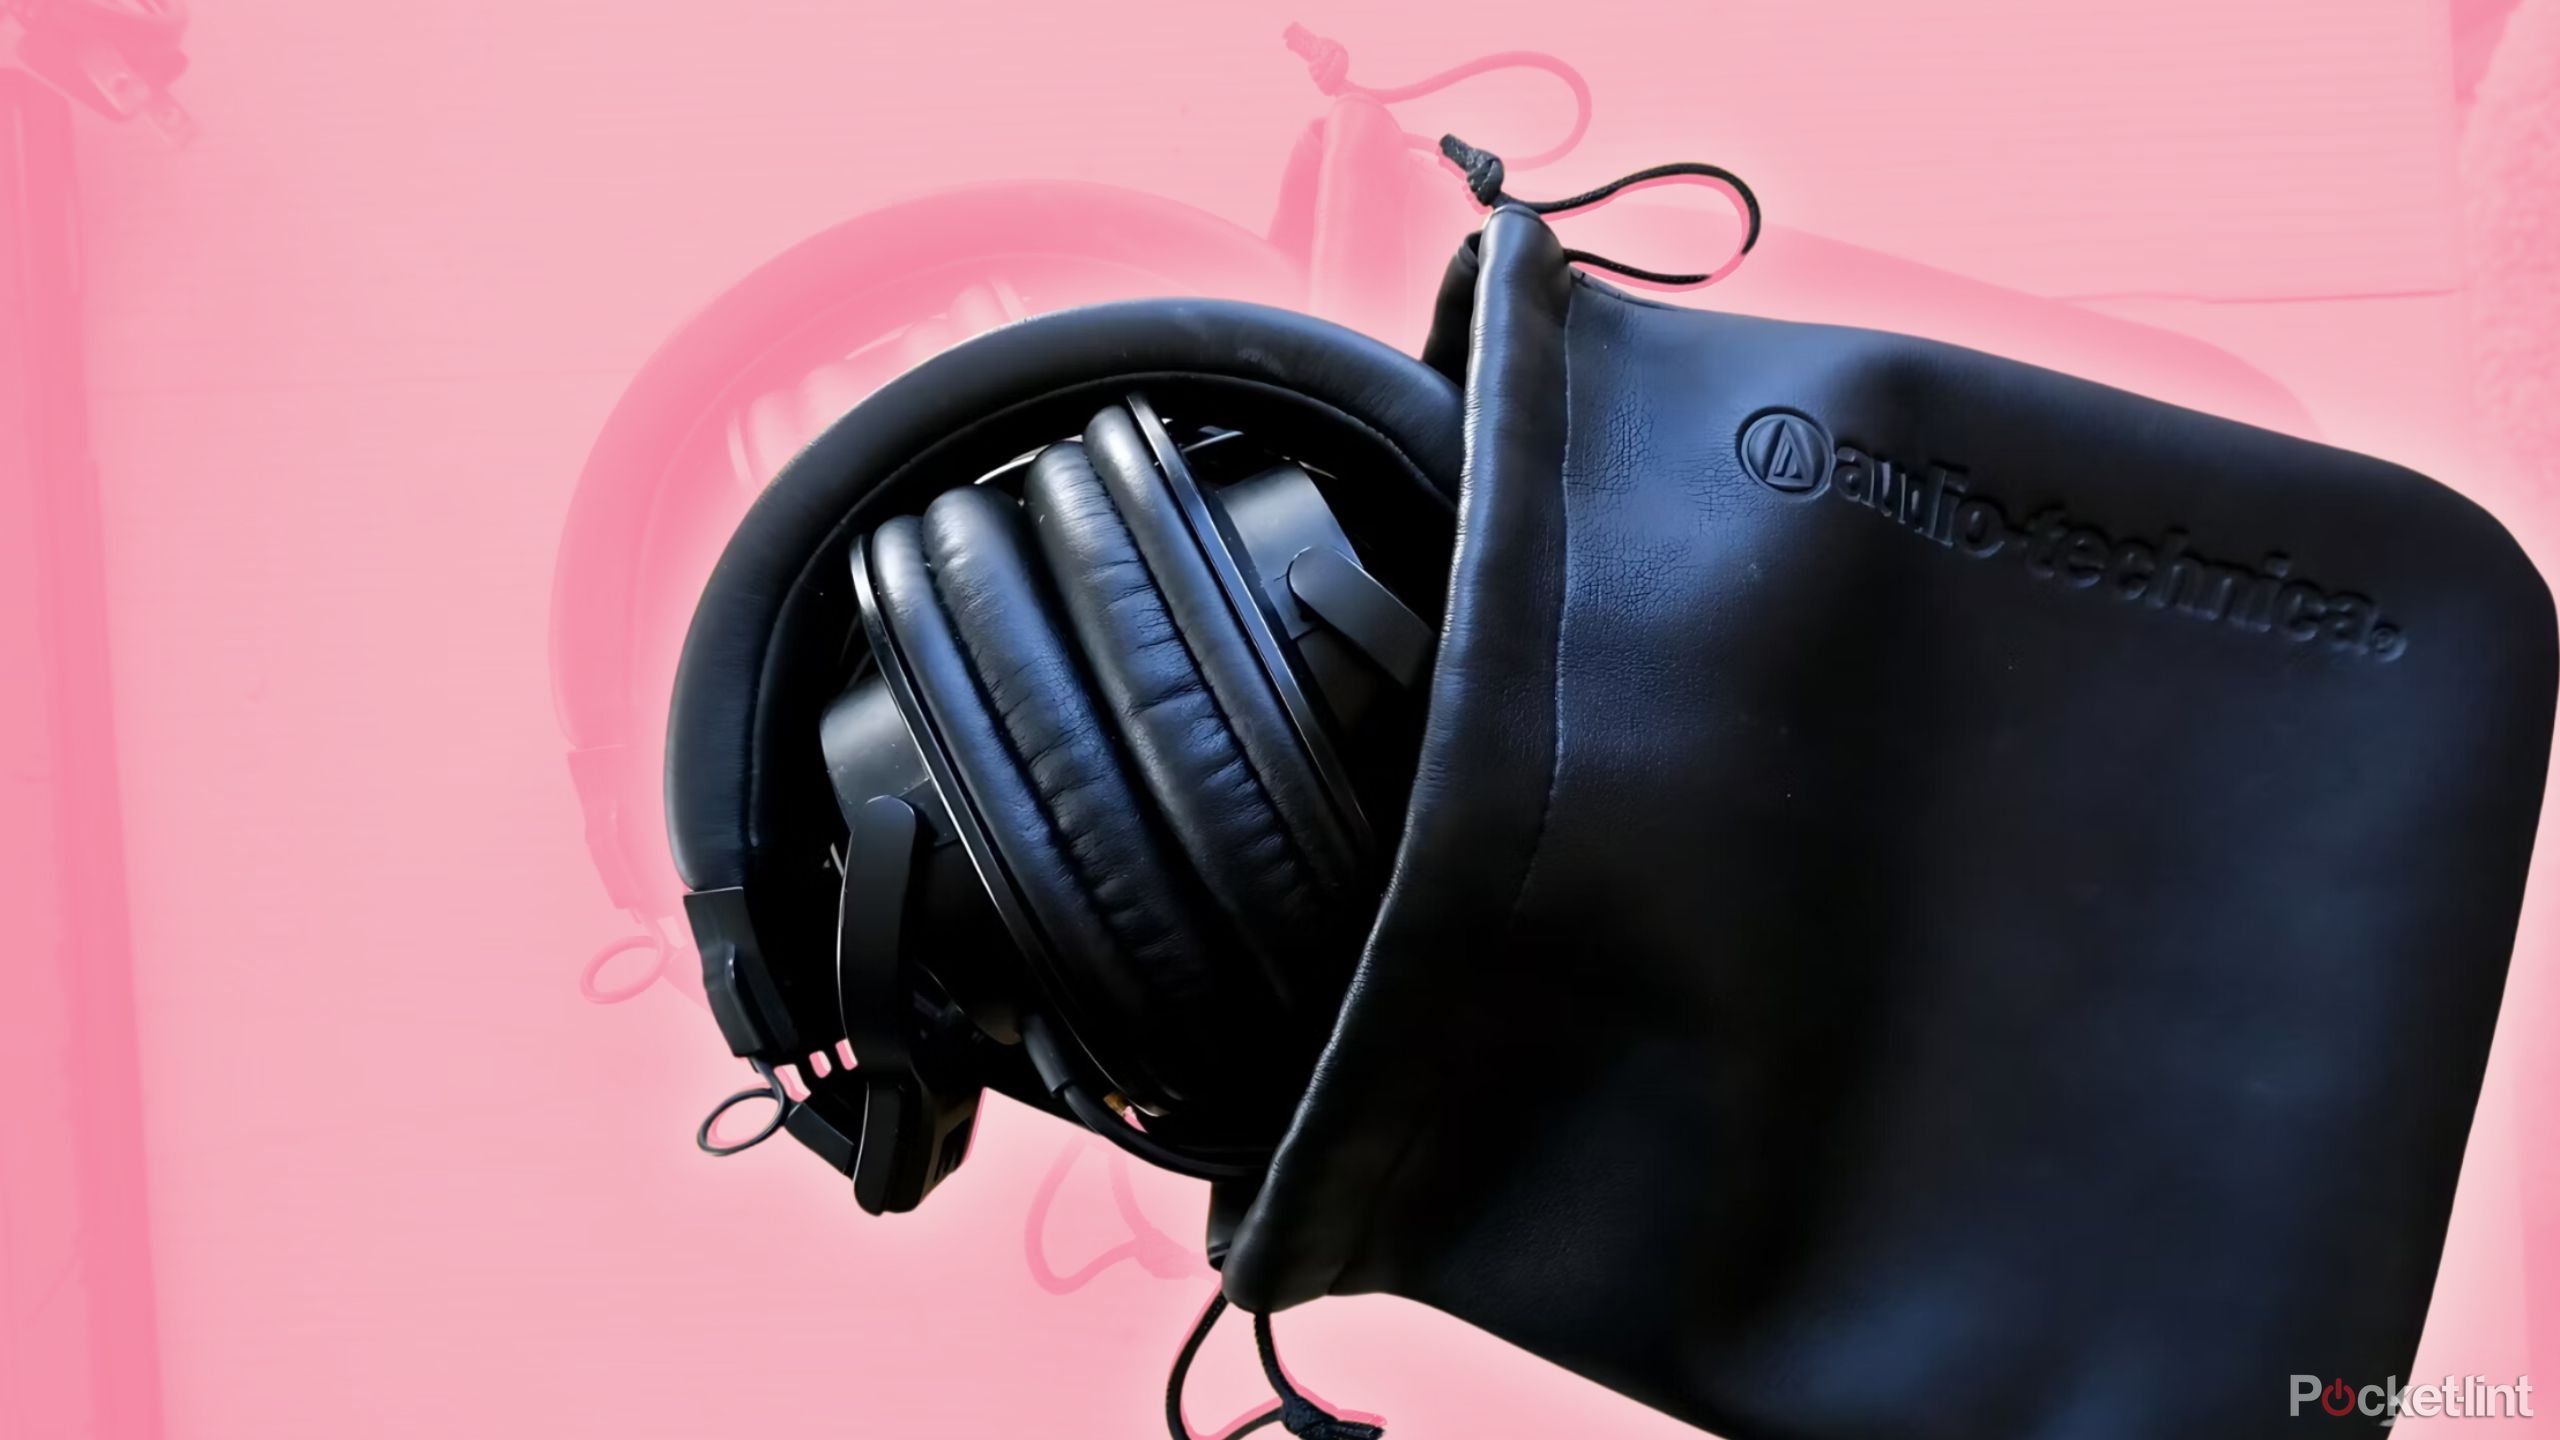 Audio-technica studio headphones